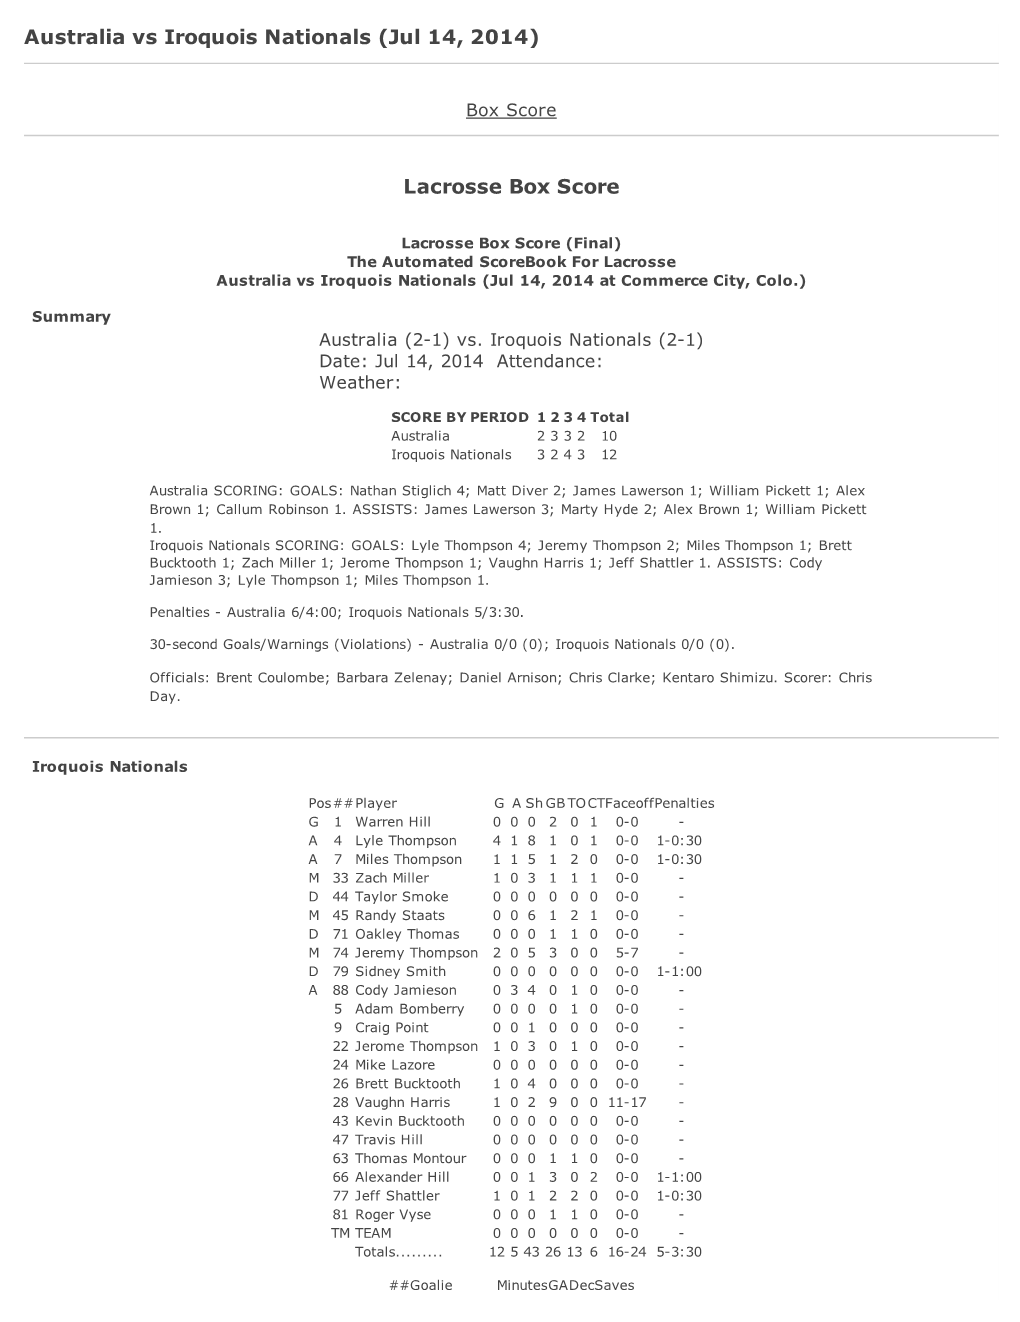 Lacrosse Box Score